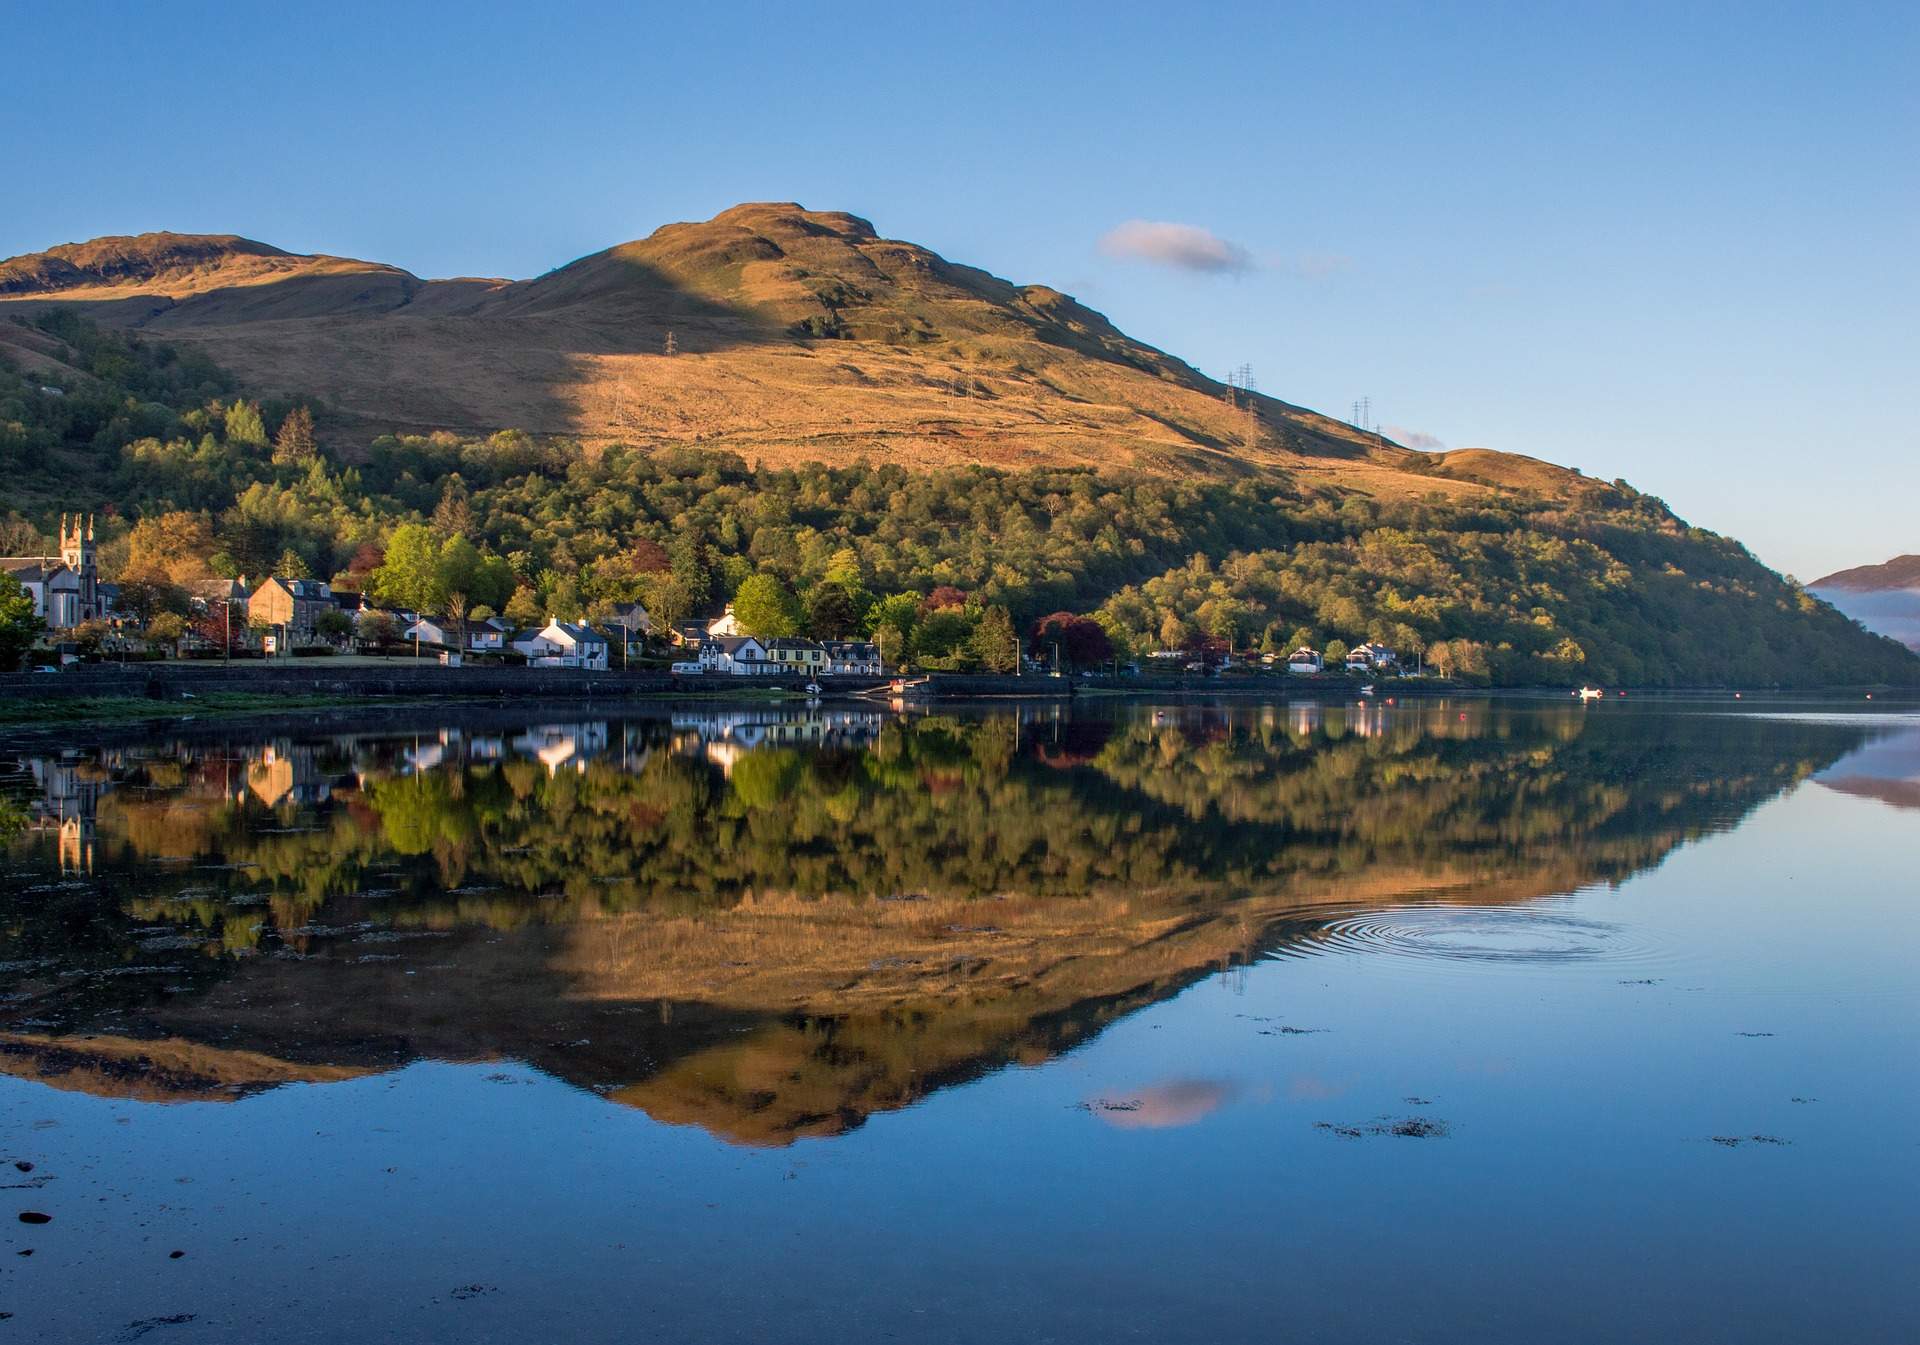 Schotse highlands / Loch Lomond 
© CameraMan095 via Pixabay